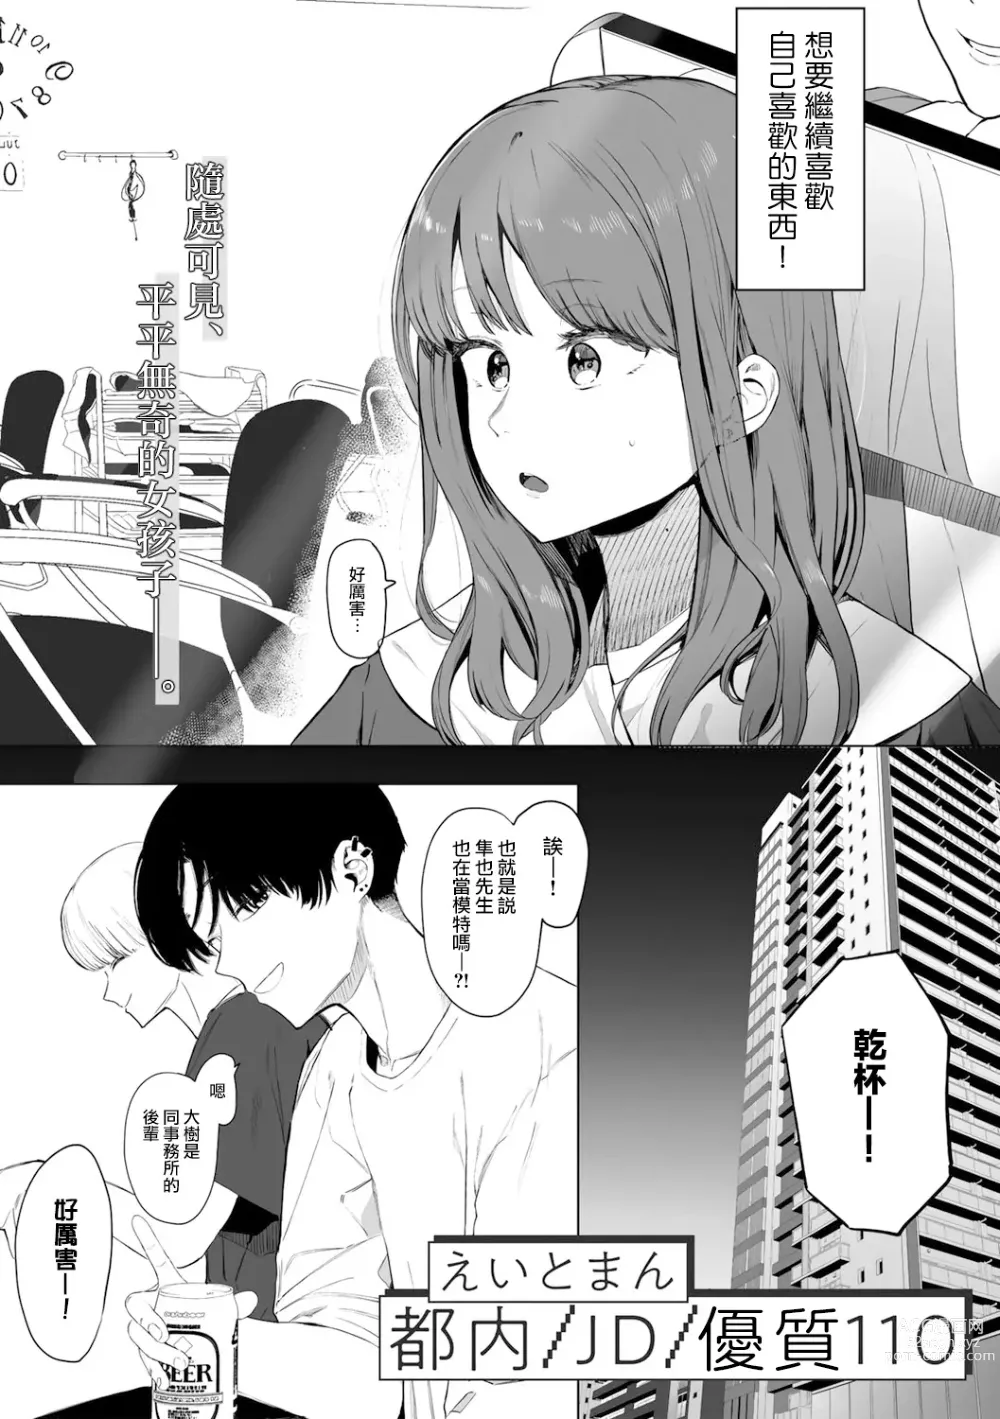 Page 3 of manga 都内/JD/优质110